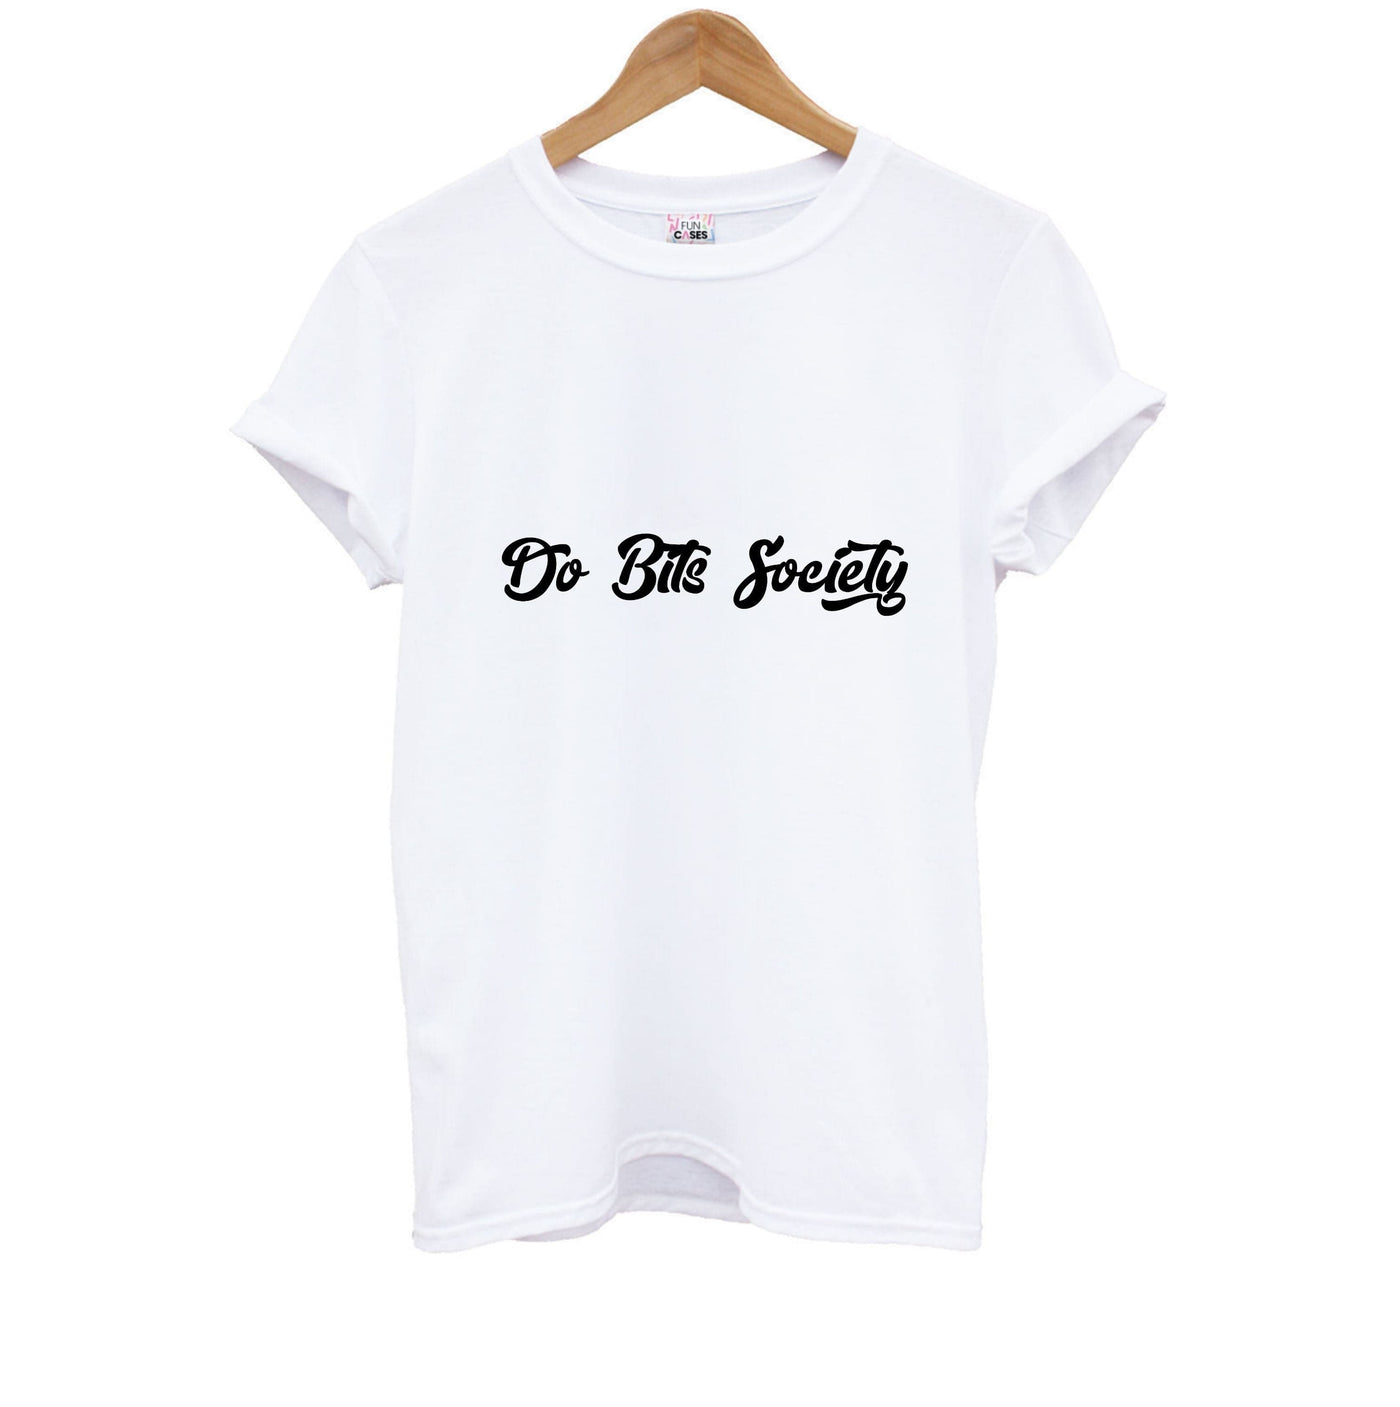 Do Bits Society - Islanders Kids T-Shirt